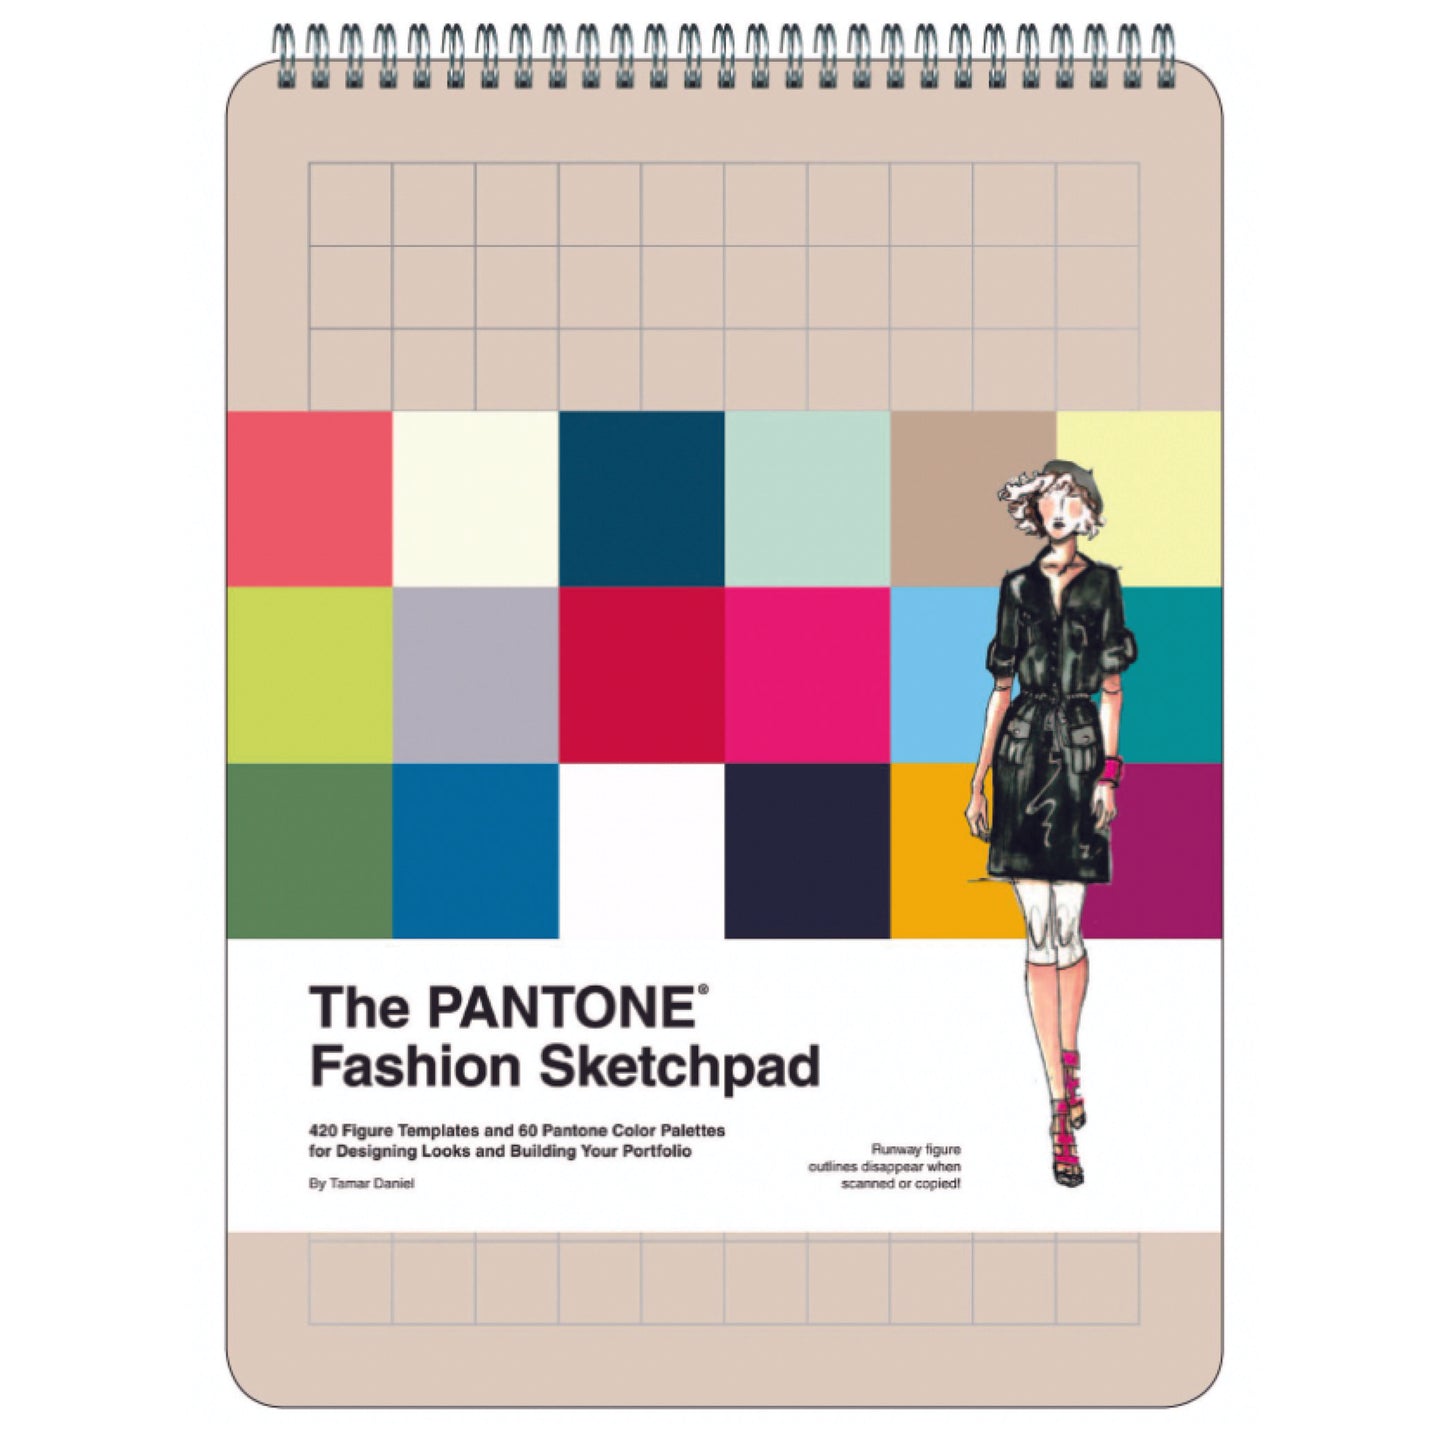 The PANTONE Fashion Sketchpad by Tamar Daniel